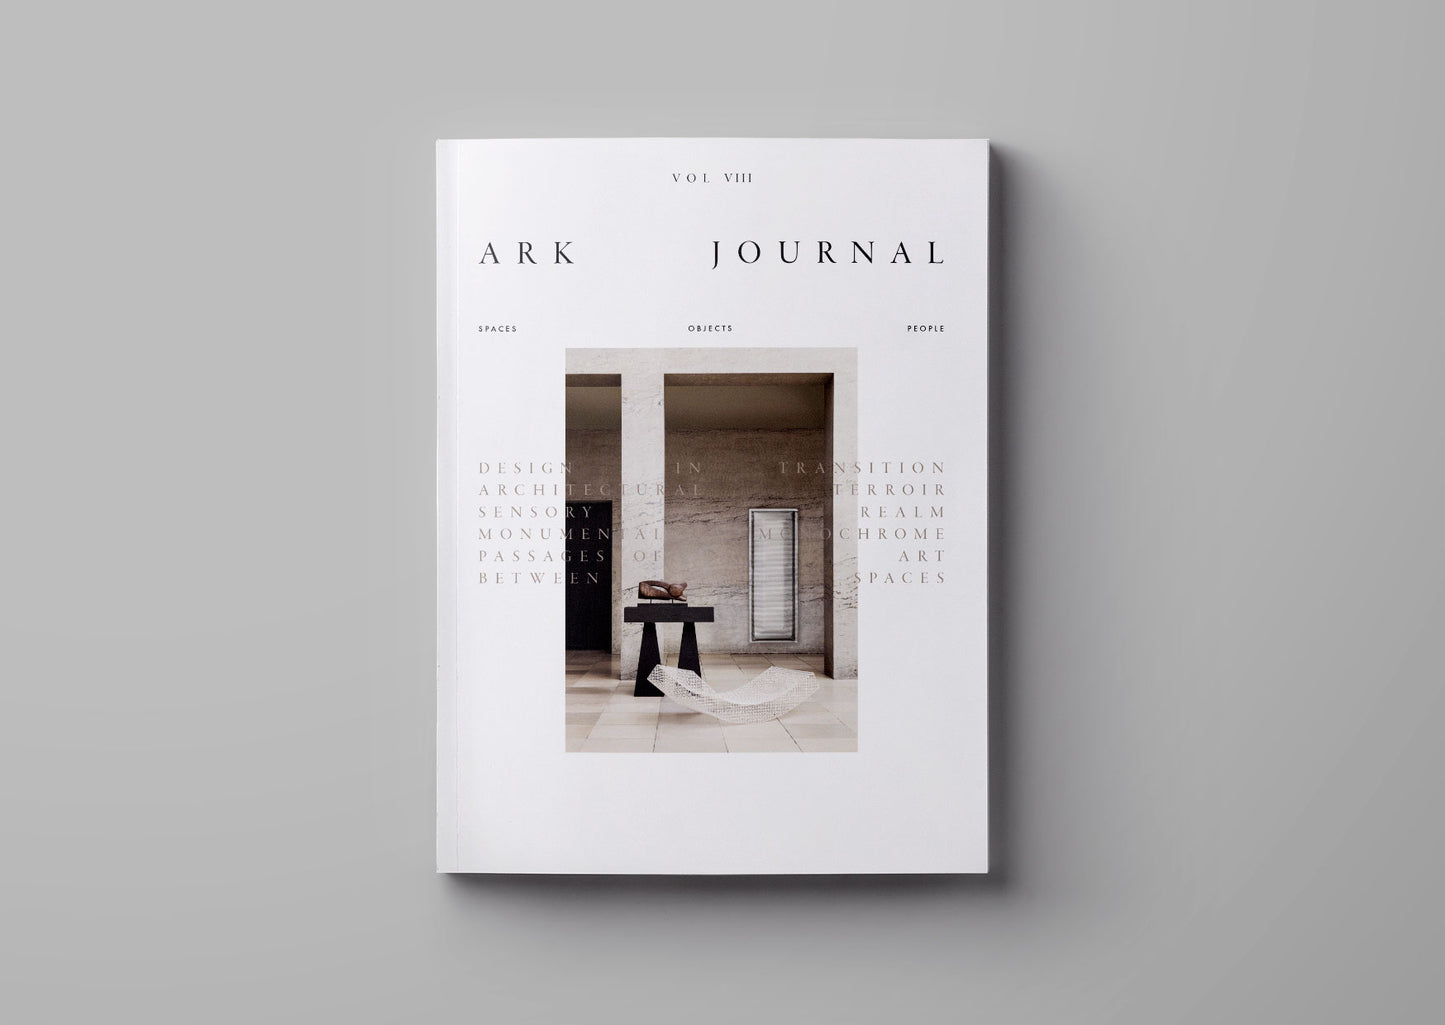 Ark Journal Vol. VIII